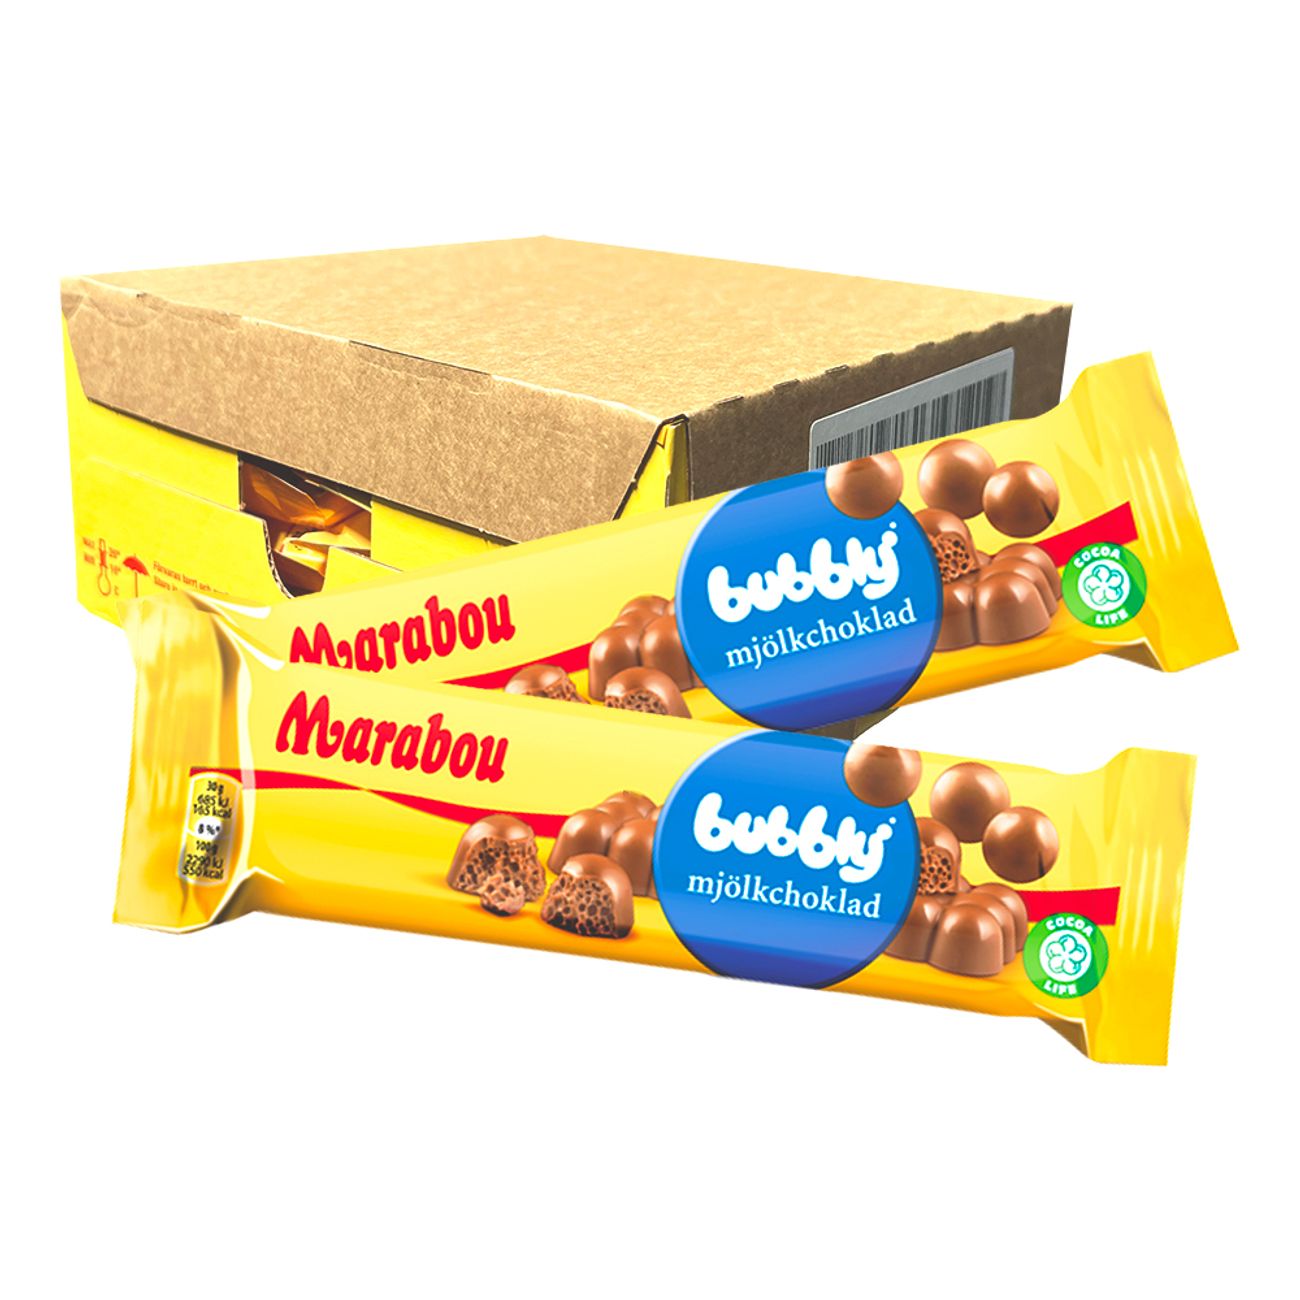 dubbel-bubblig-mjolkchoklad-storpack-43331-2